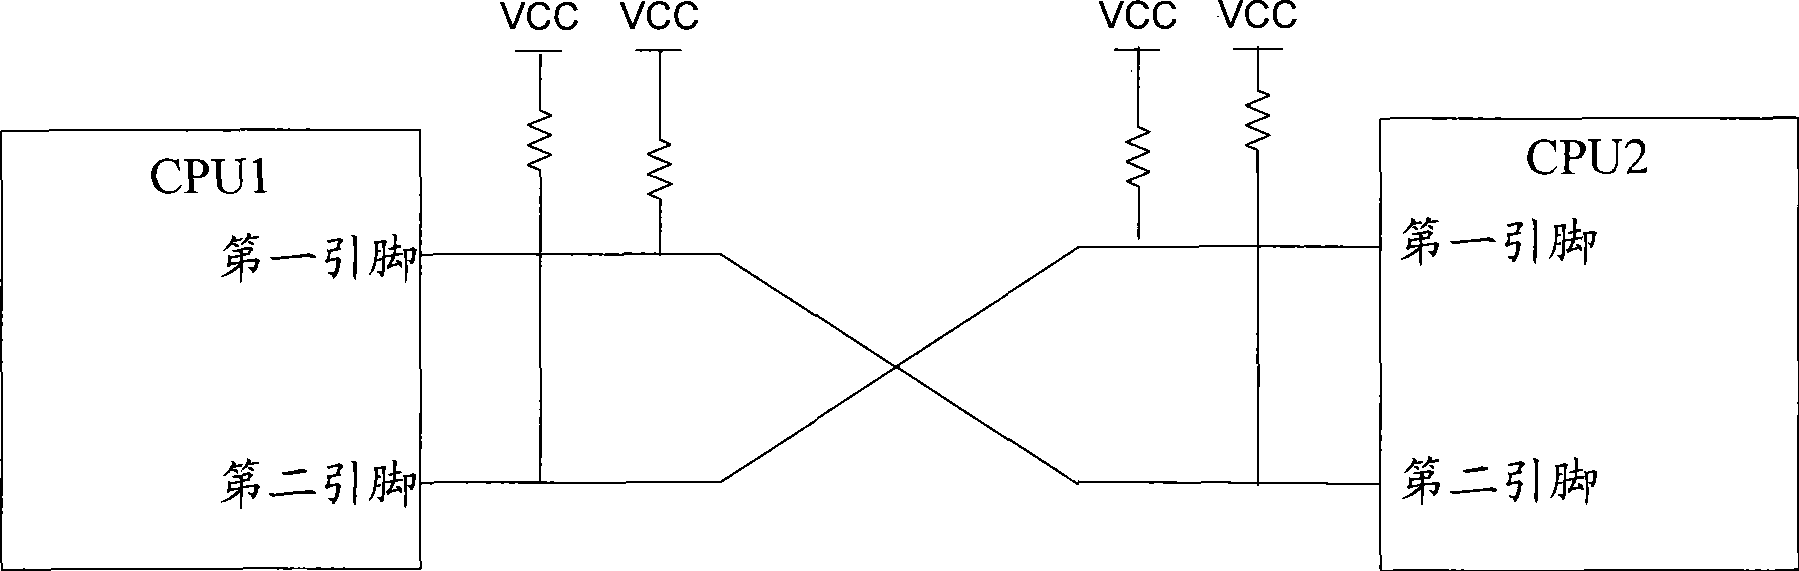 Redundant switch control circuit and method